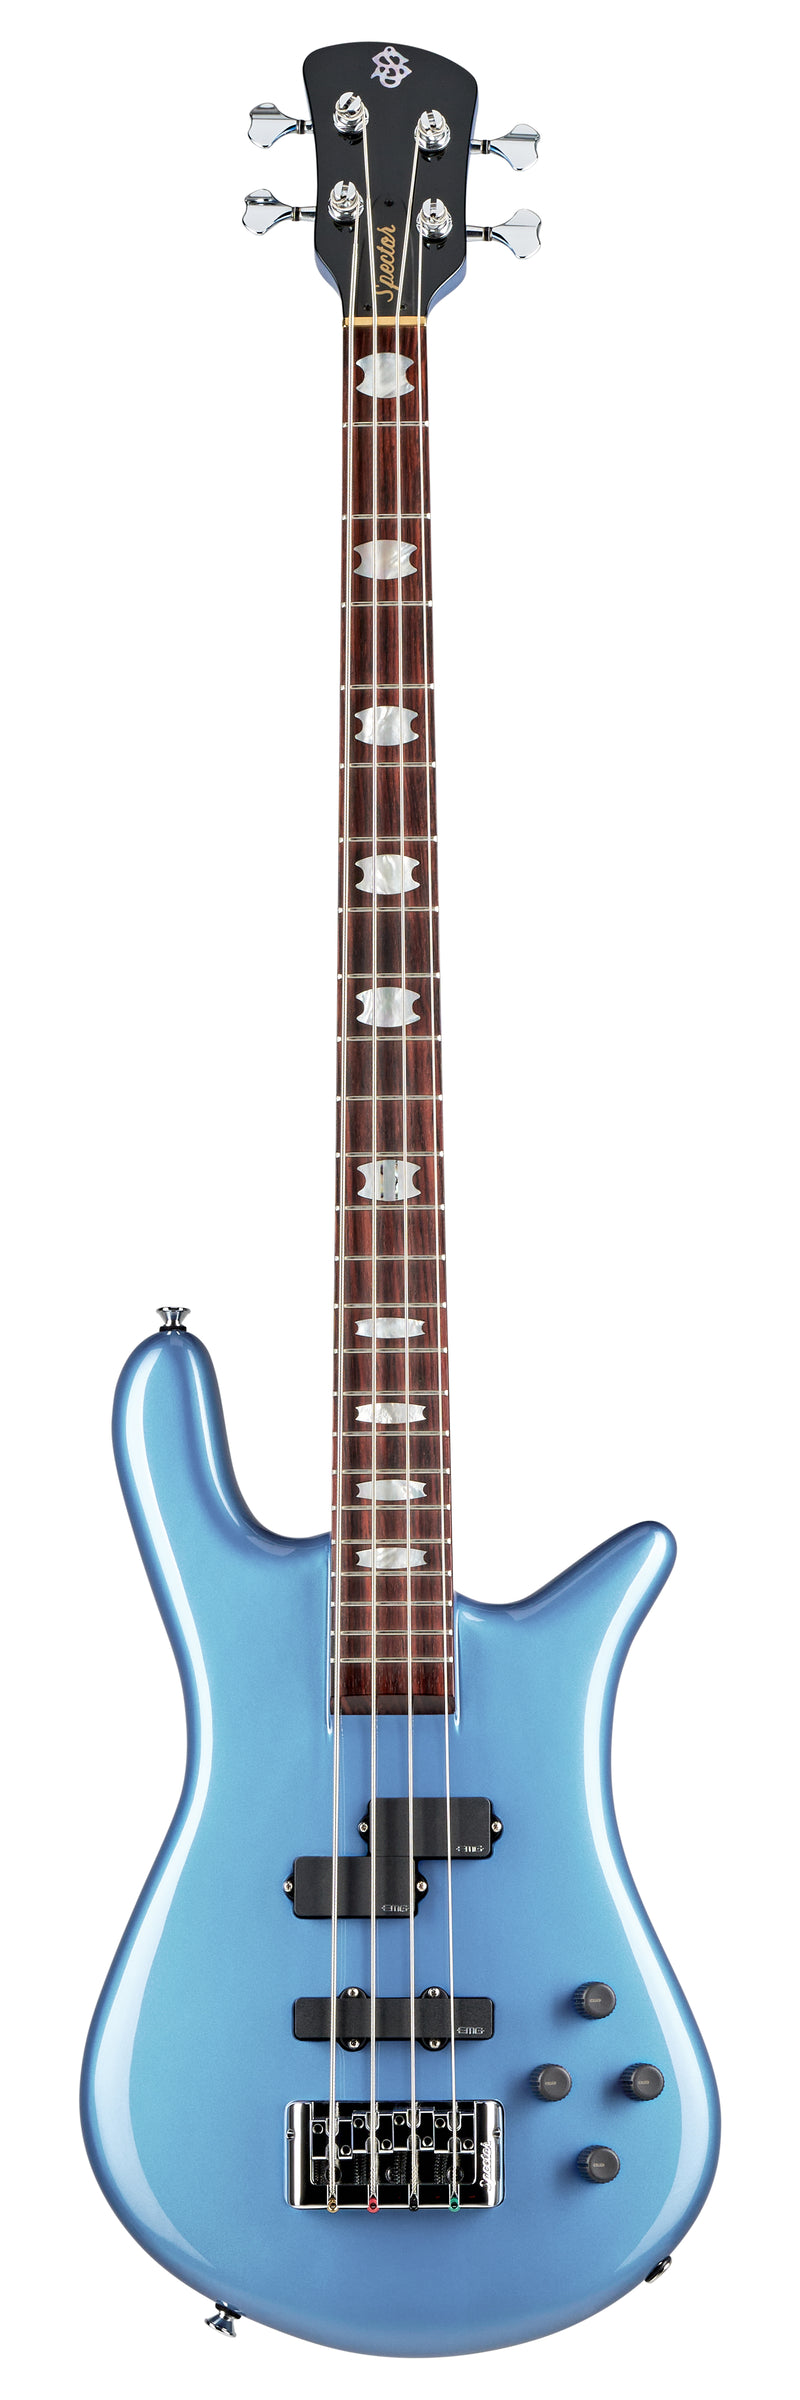 Spector EURO 4 CLASSIC Guitare basse 4 cordes (bleu métallisé brillant)